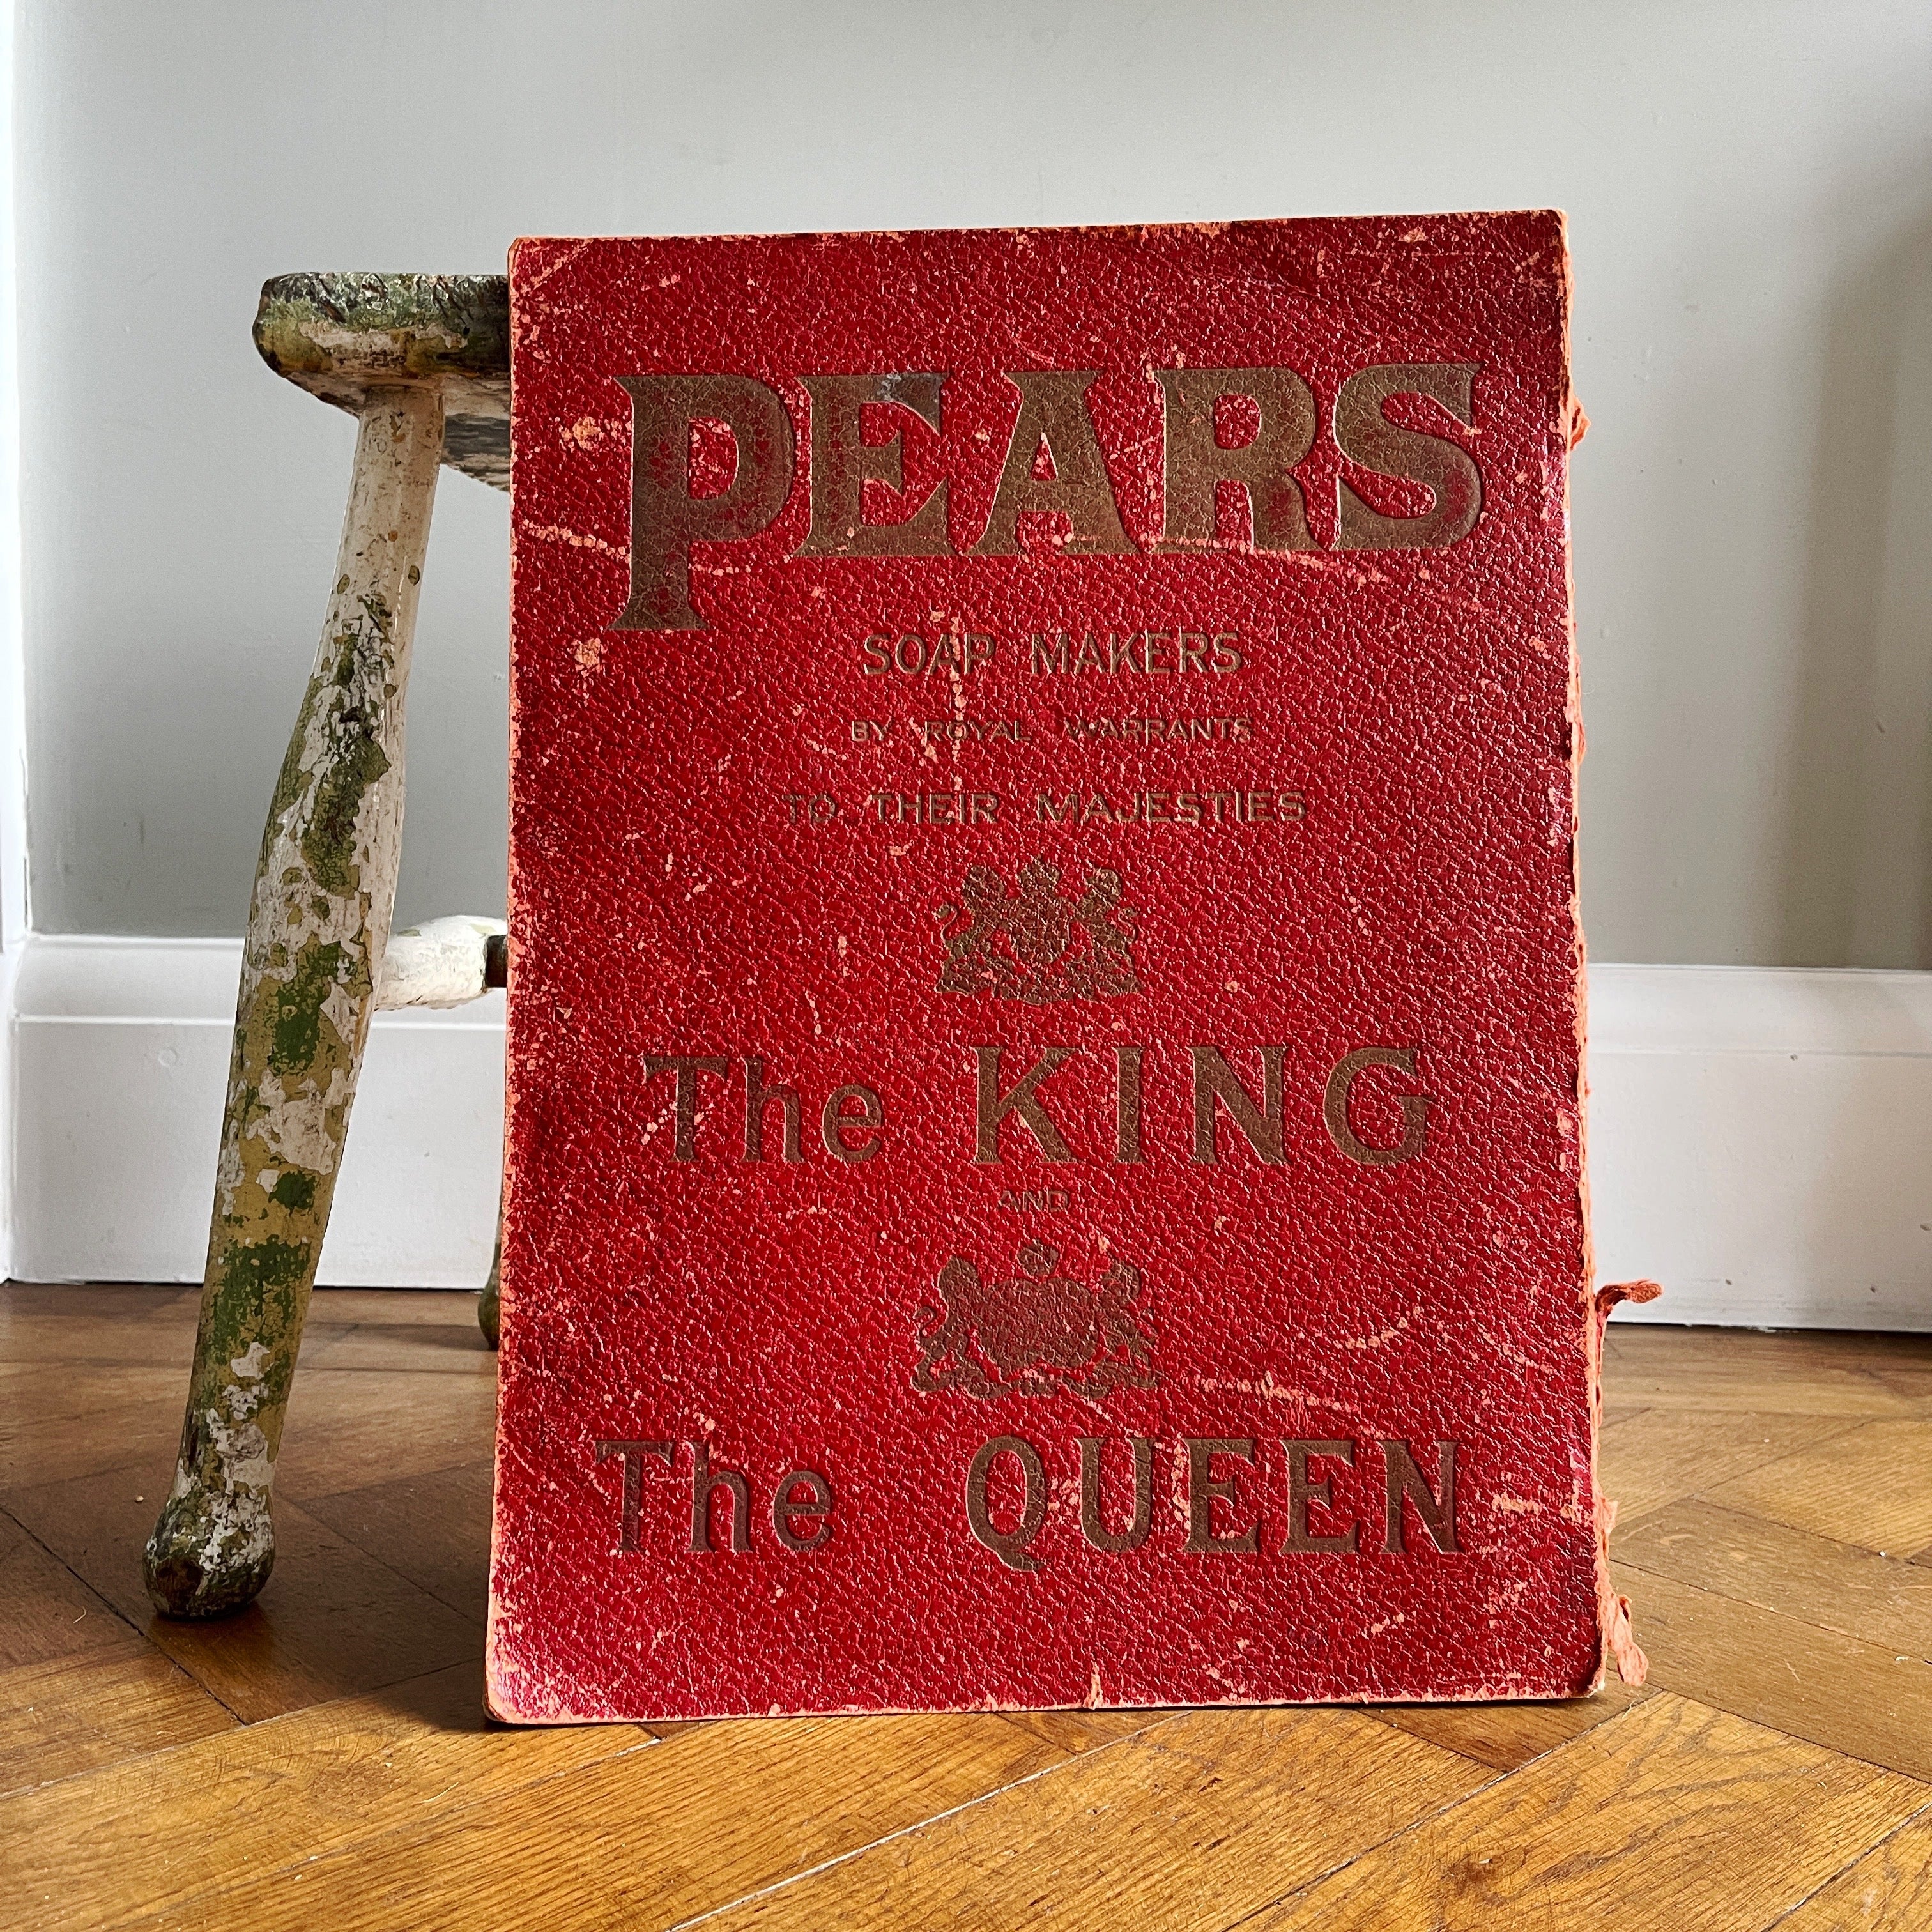 A King Edward VII Coronation Book